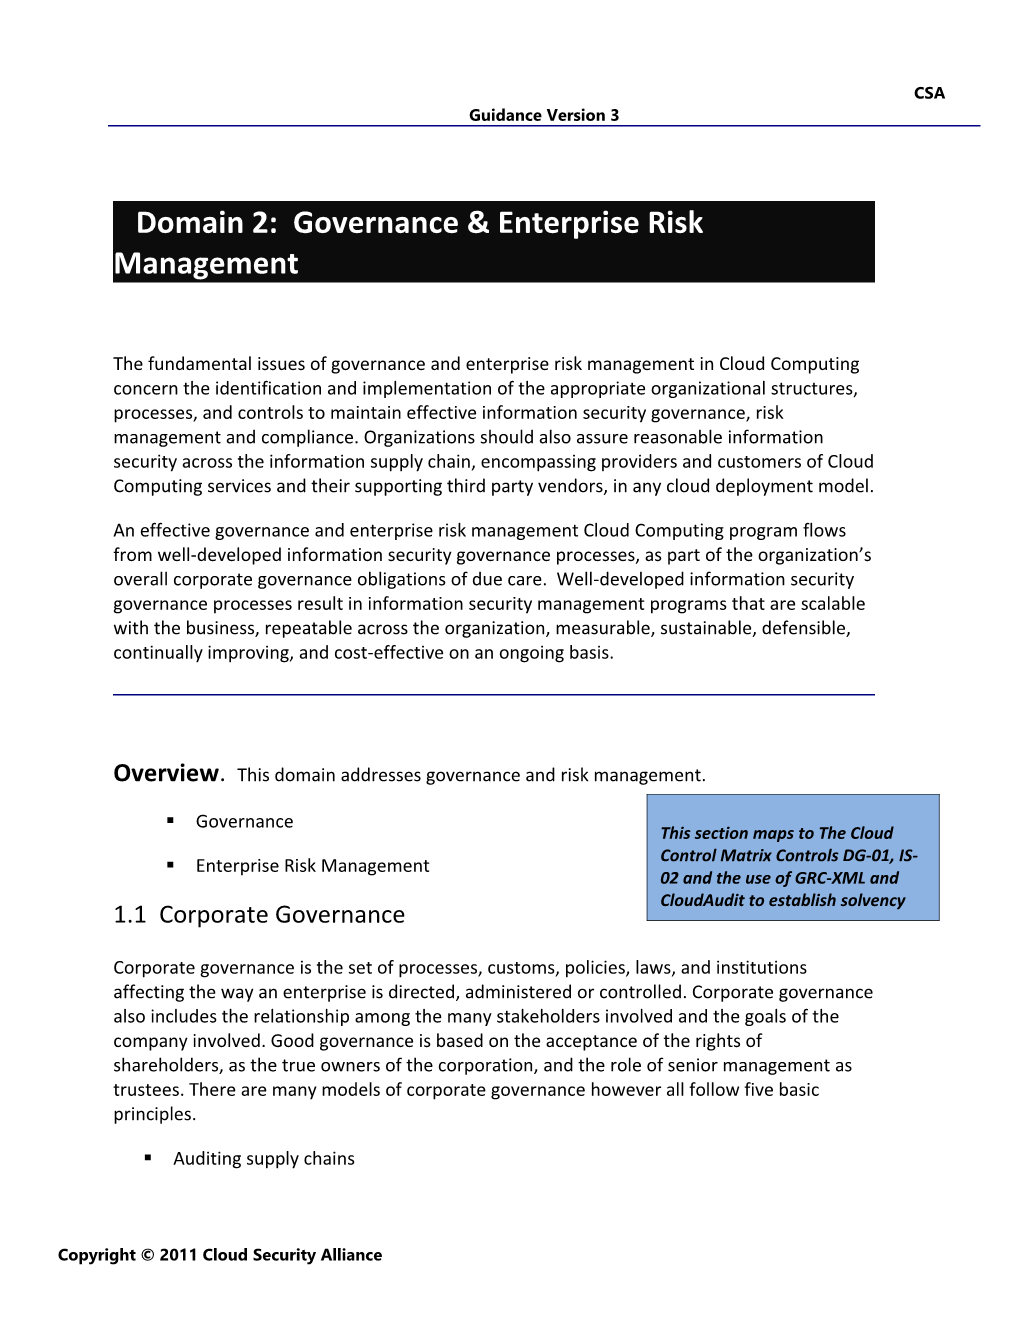 Domain 2: Governance & Enterprise Risk Management